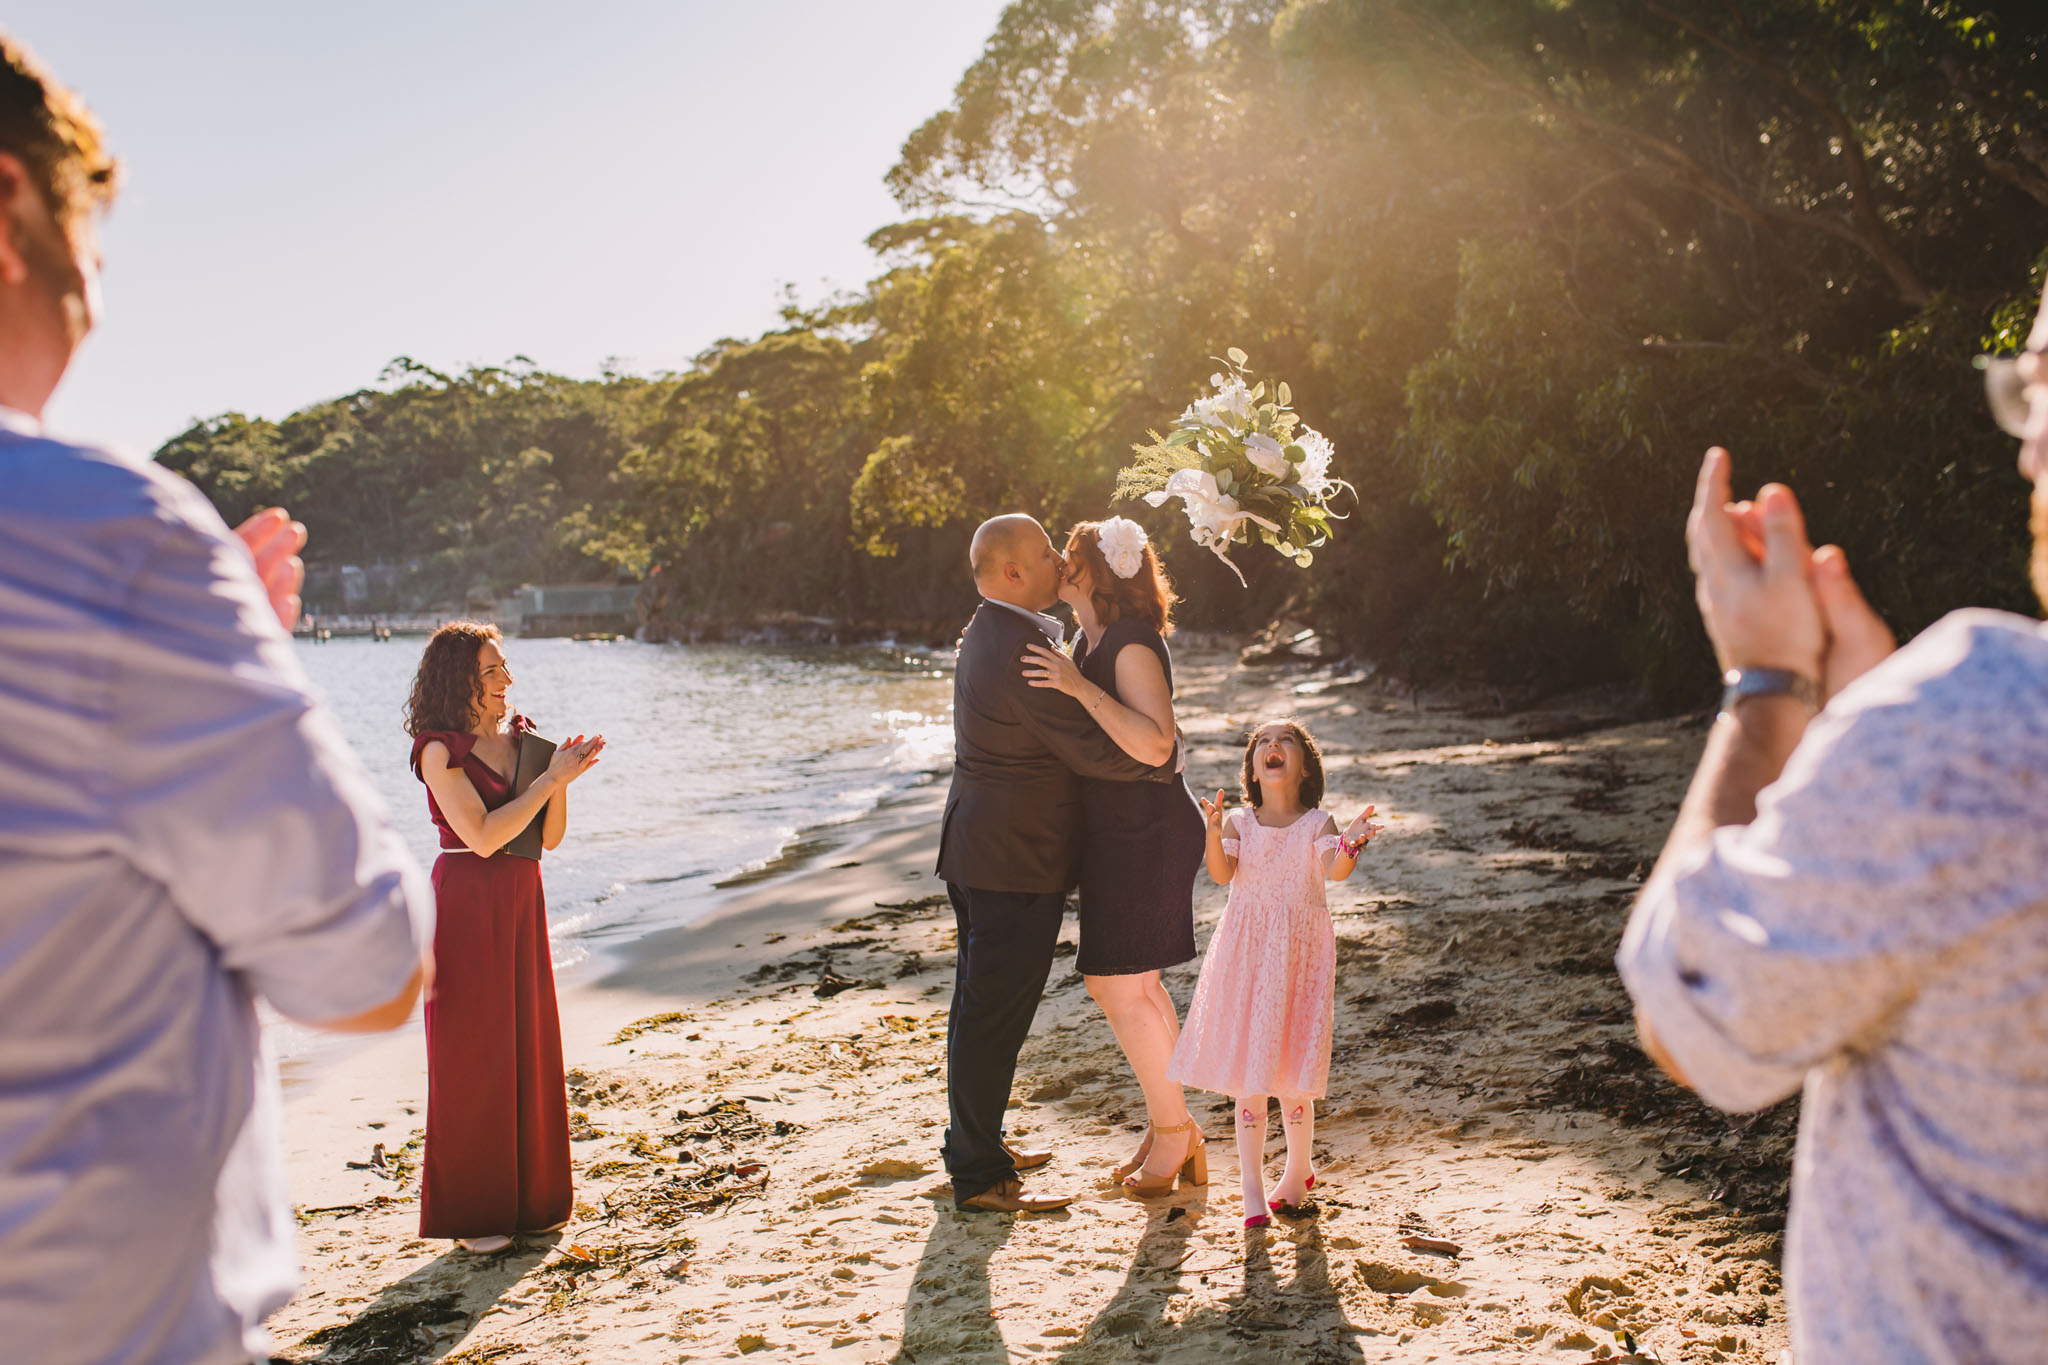 bite size sydney weddings elopements athol bay beach